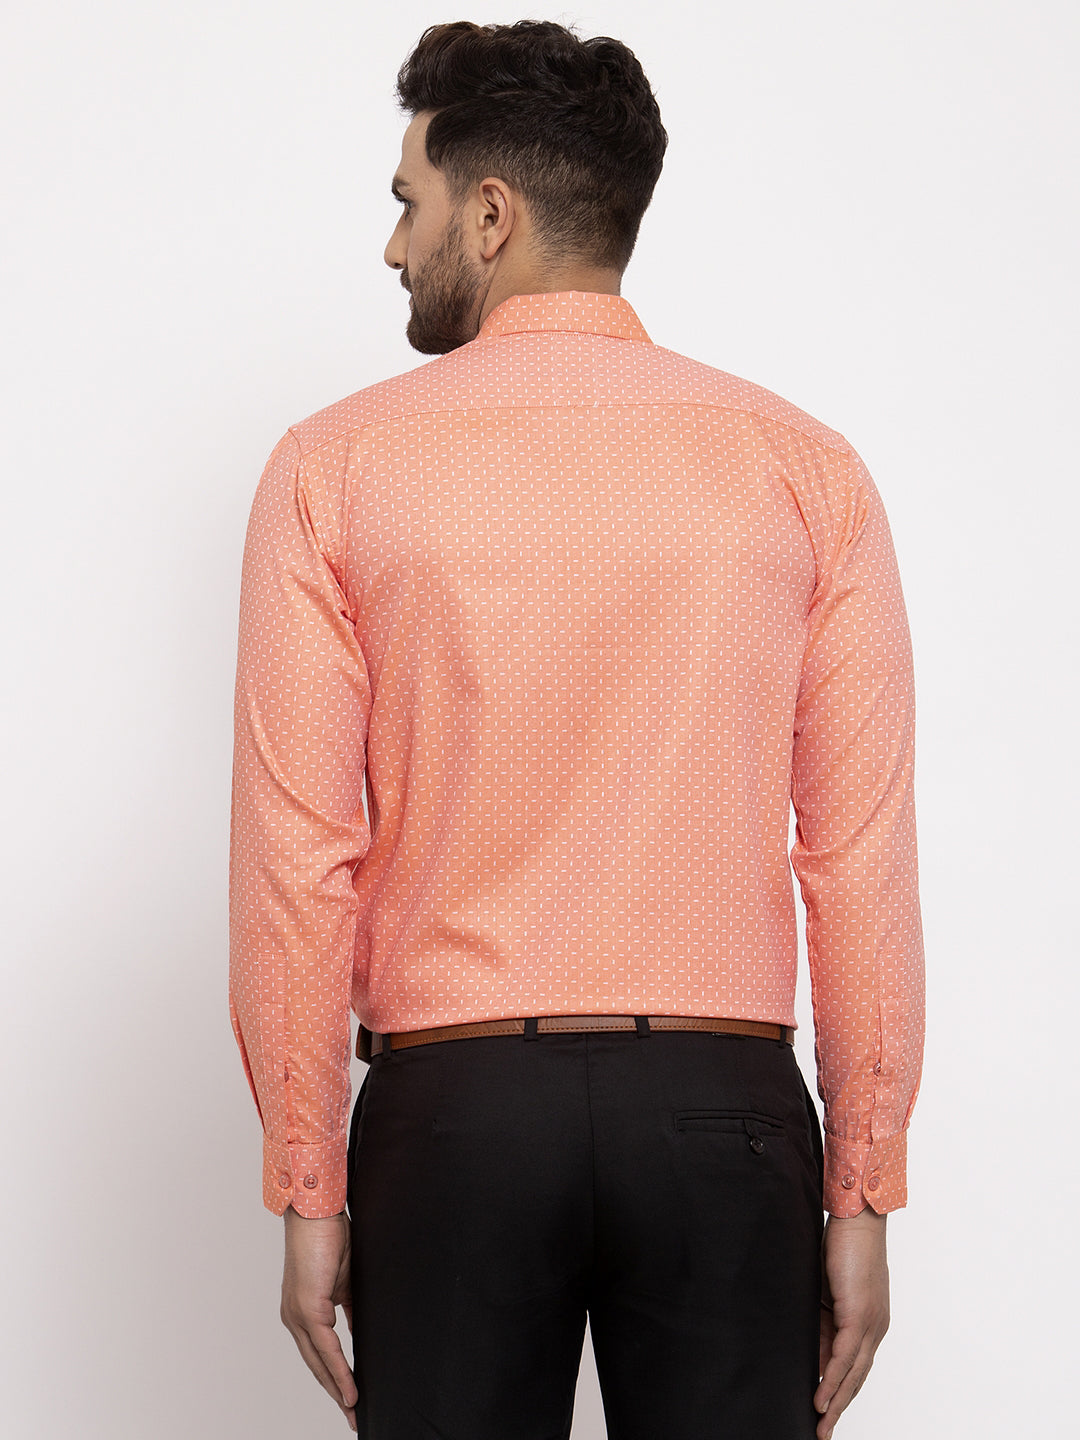 Jainish Peach Men's Cotton Printed Formal Shirt's